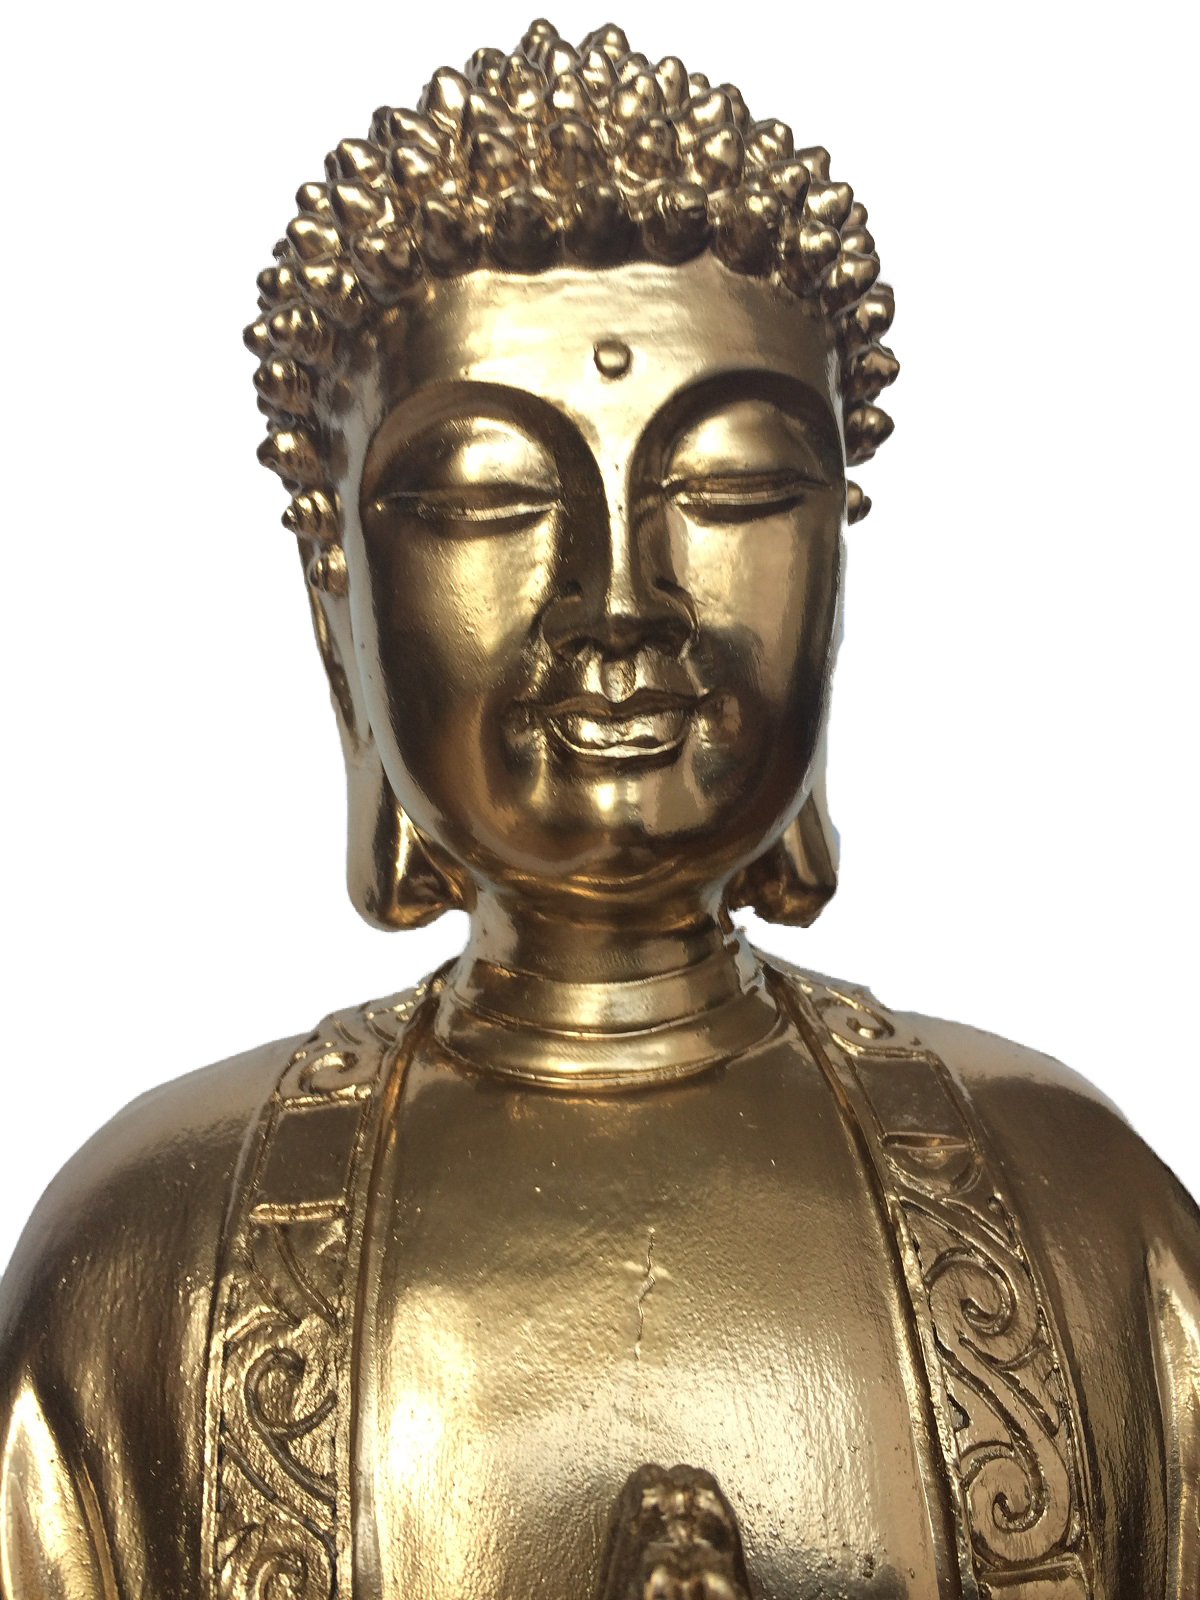 grand-bouddha-dore-en-meditation-pei-17777-sgrbdore-1496506197